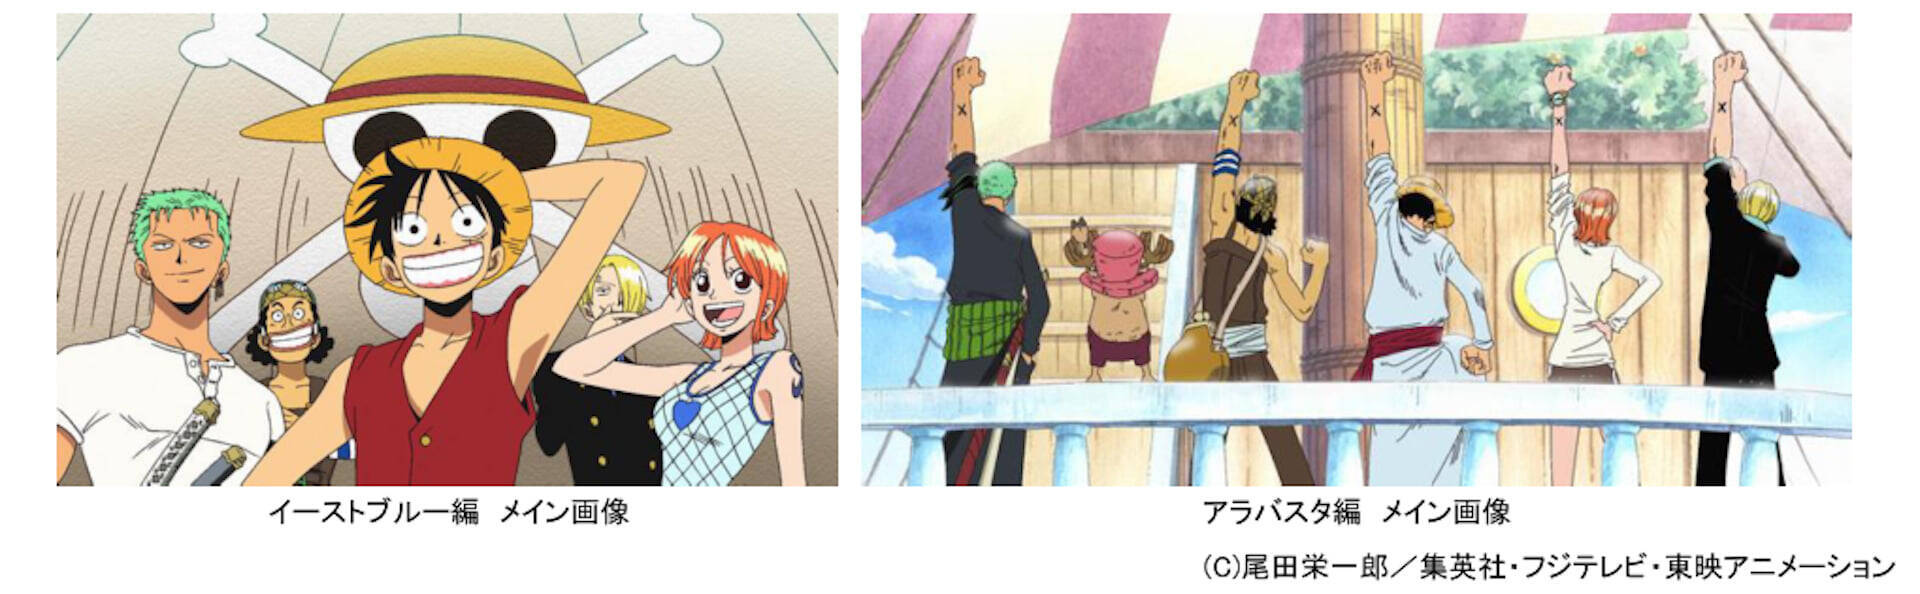 One Piece Stampede 公開を前に あの名場面をもう一度 ワンピース Fodにて1 130話が無料配信 放送開始20周年記念 2019年7月8日 エキサイトニュース